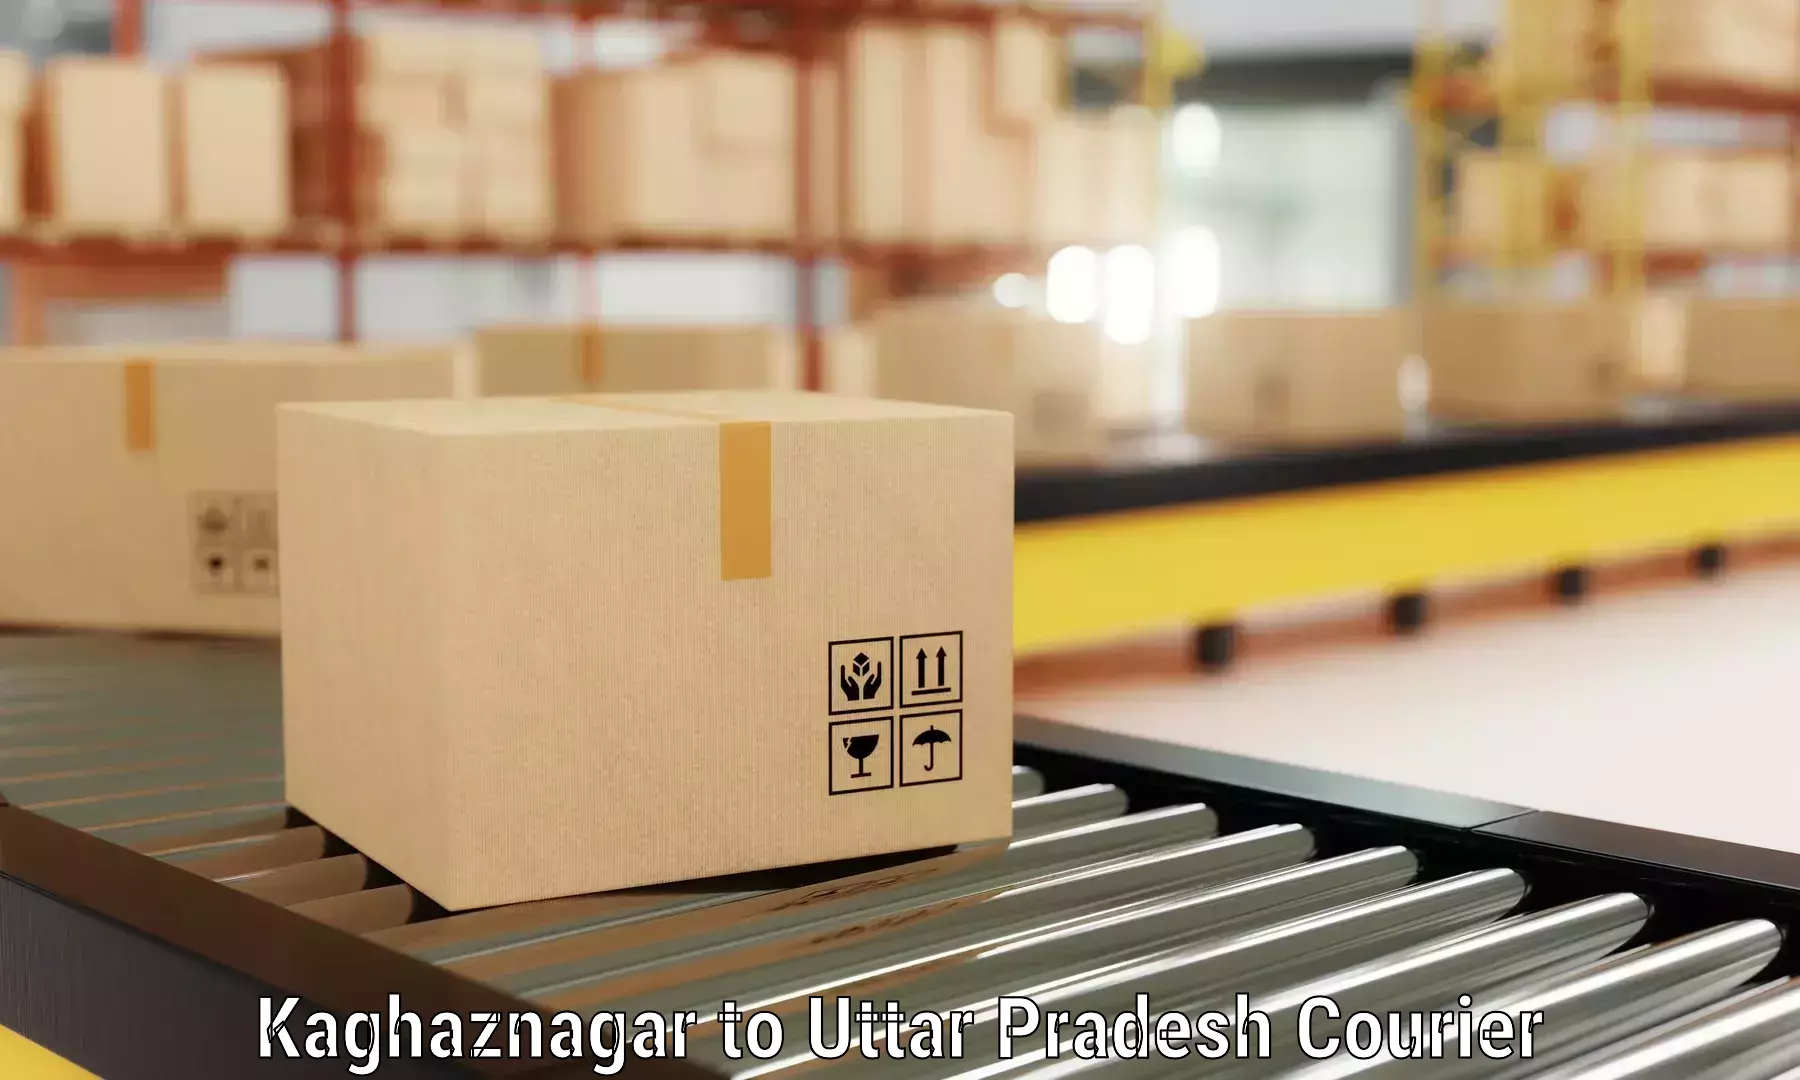 Moving and storage services Kaghaznagar to Dadri